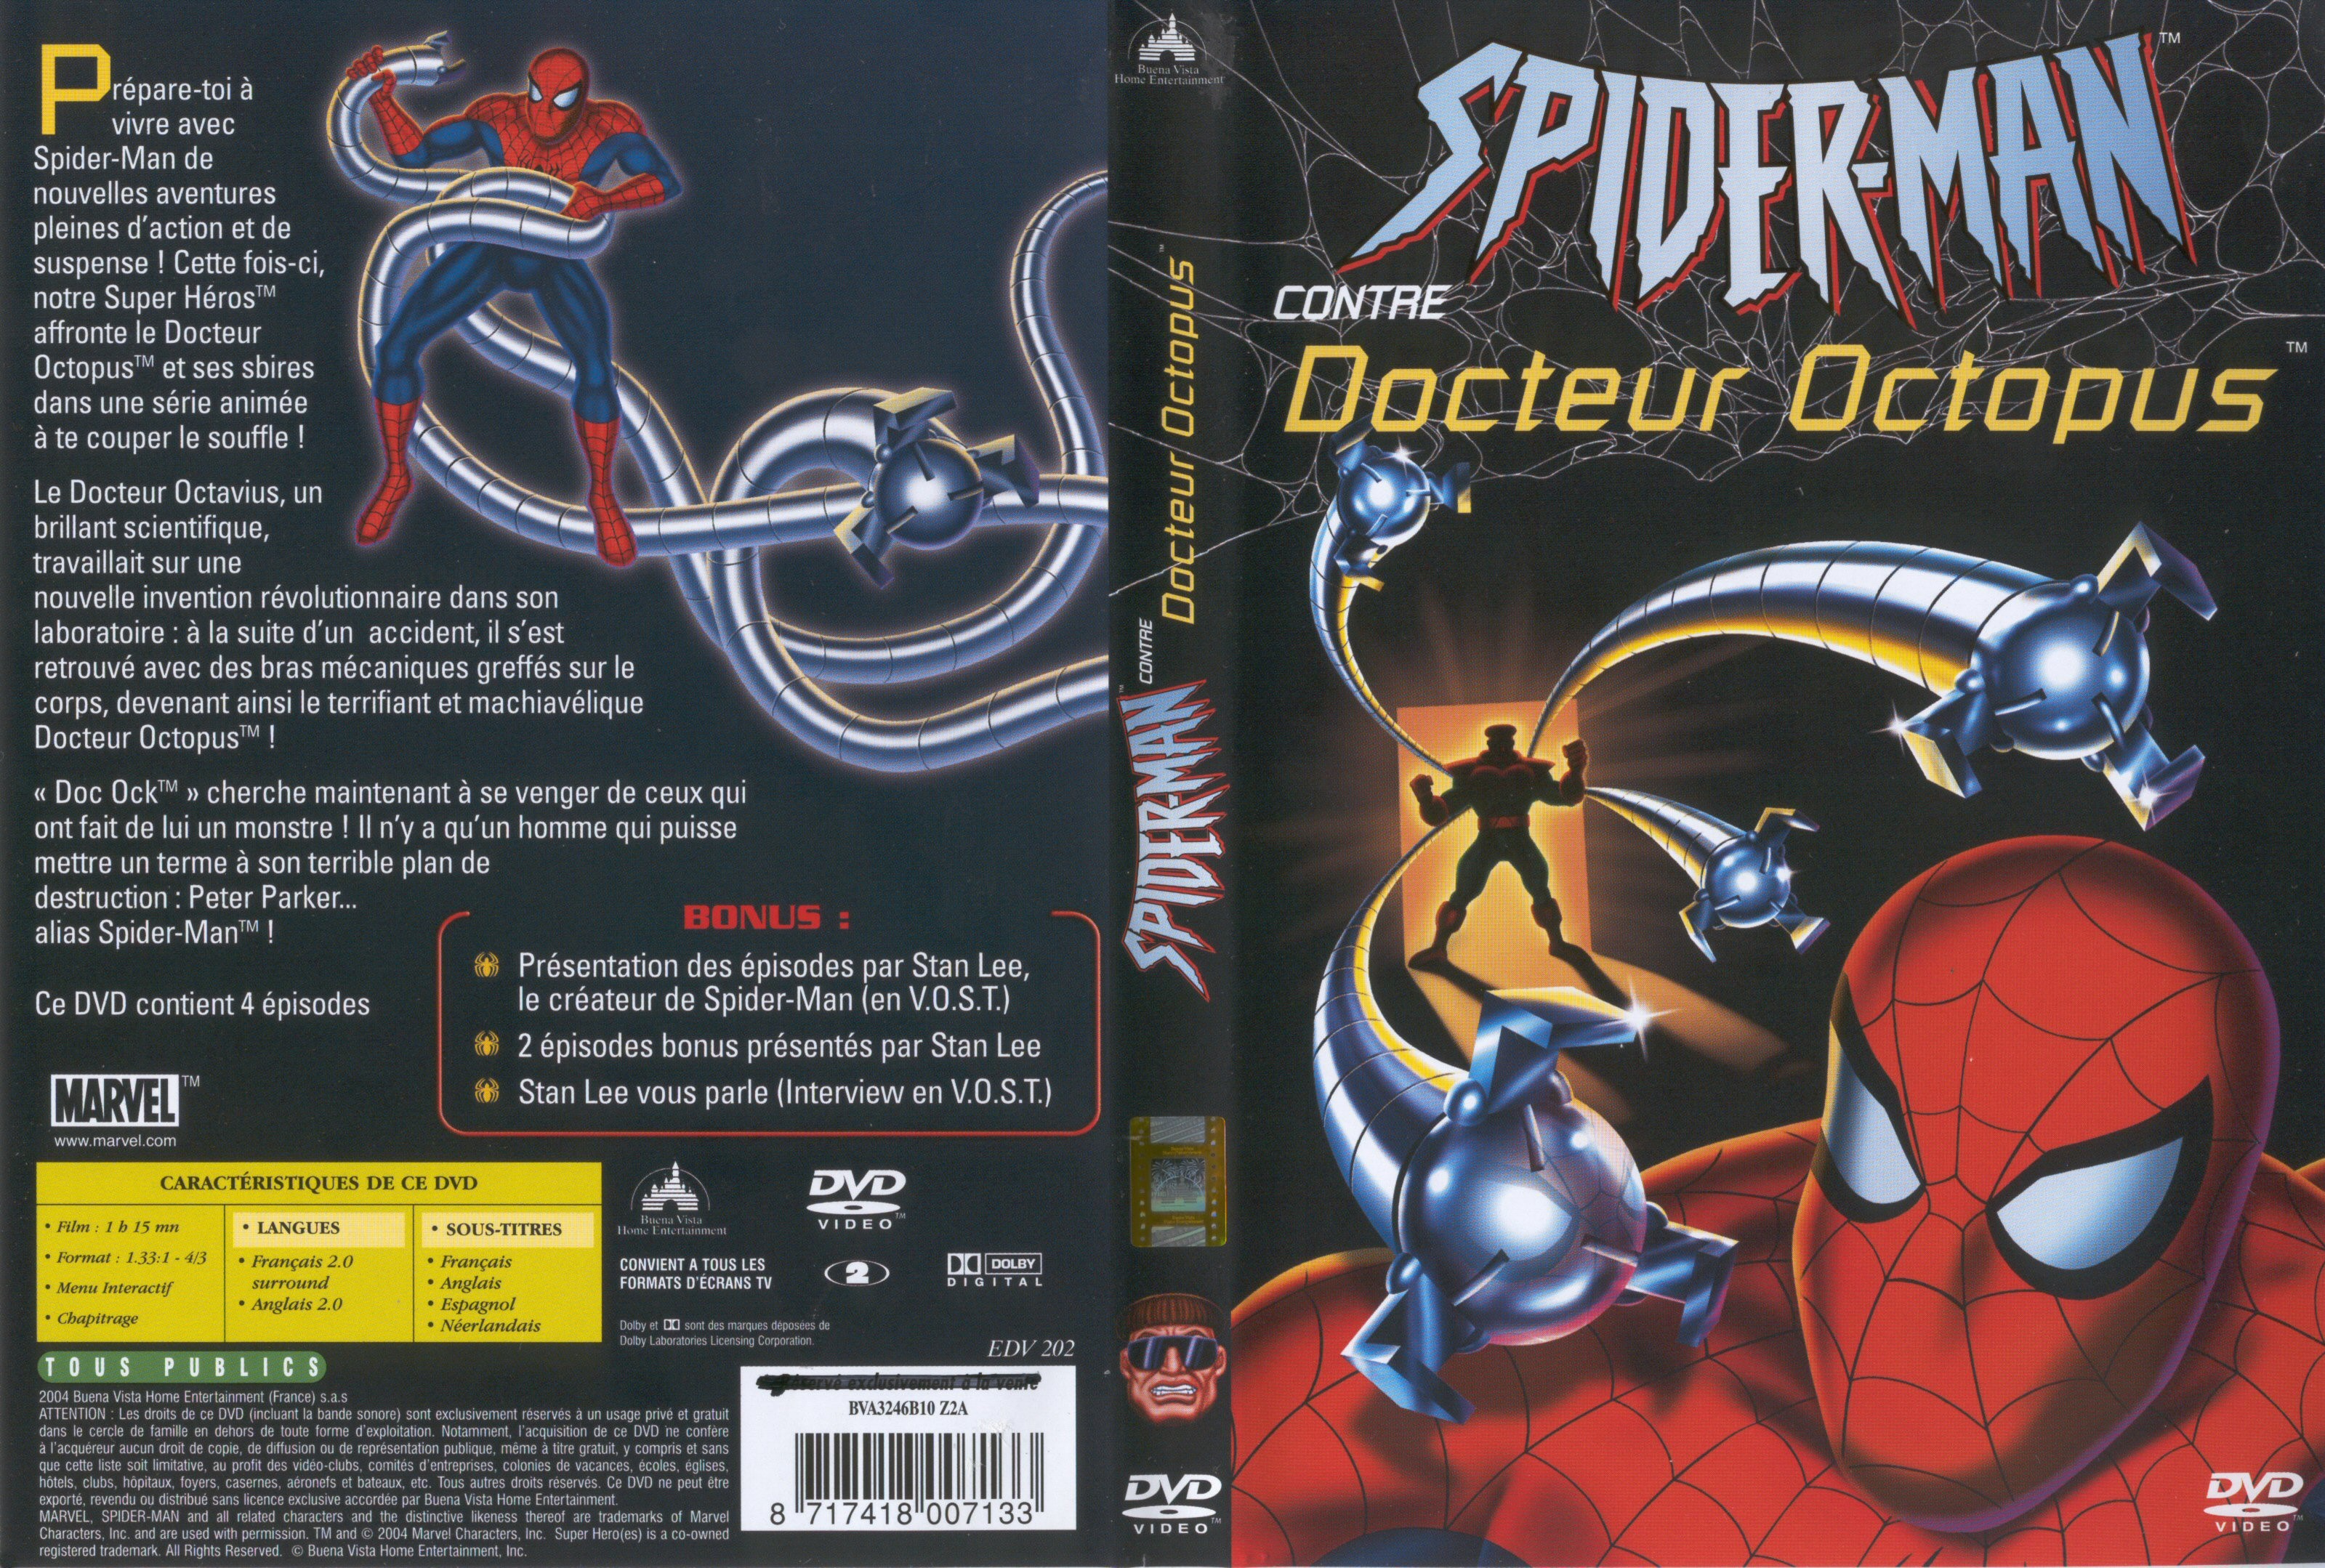 Jaquette DVD Spiderman contre docteur Octopus (DA)